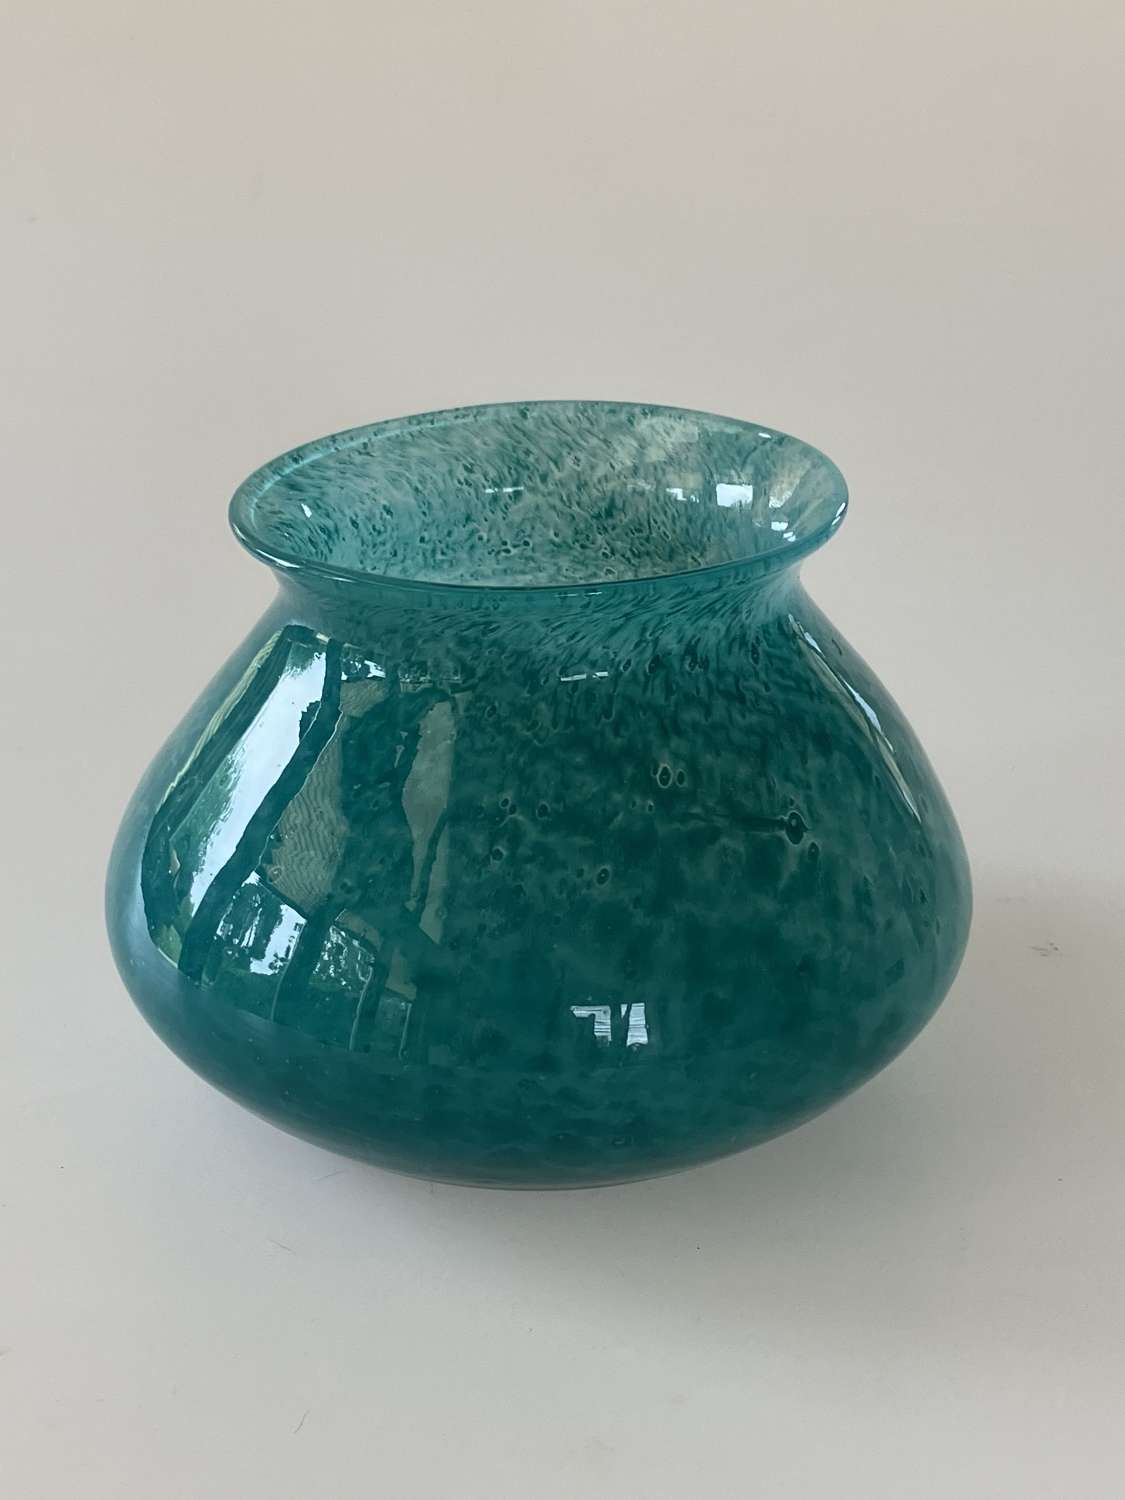 Monart/Vasart blue cloudy cauldron shaped vase